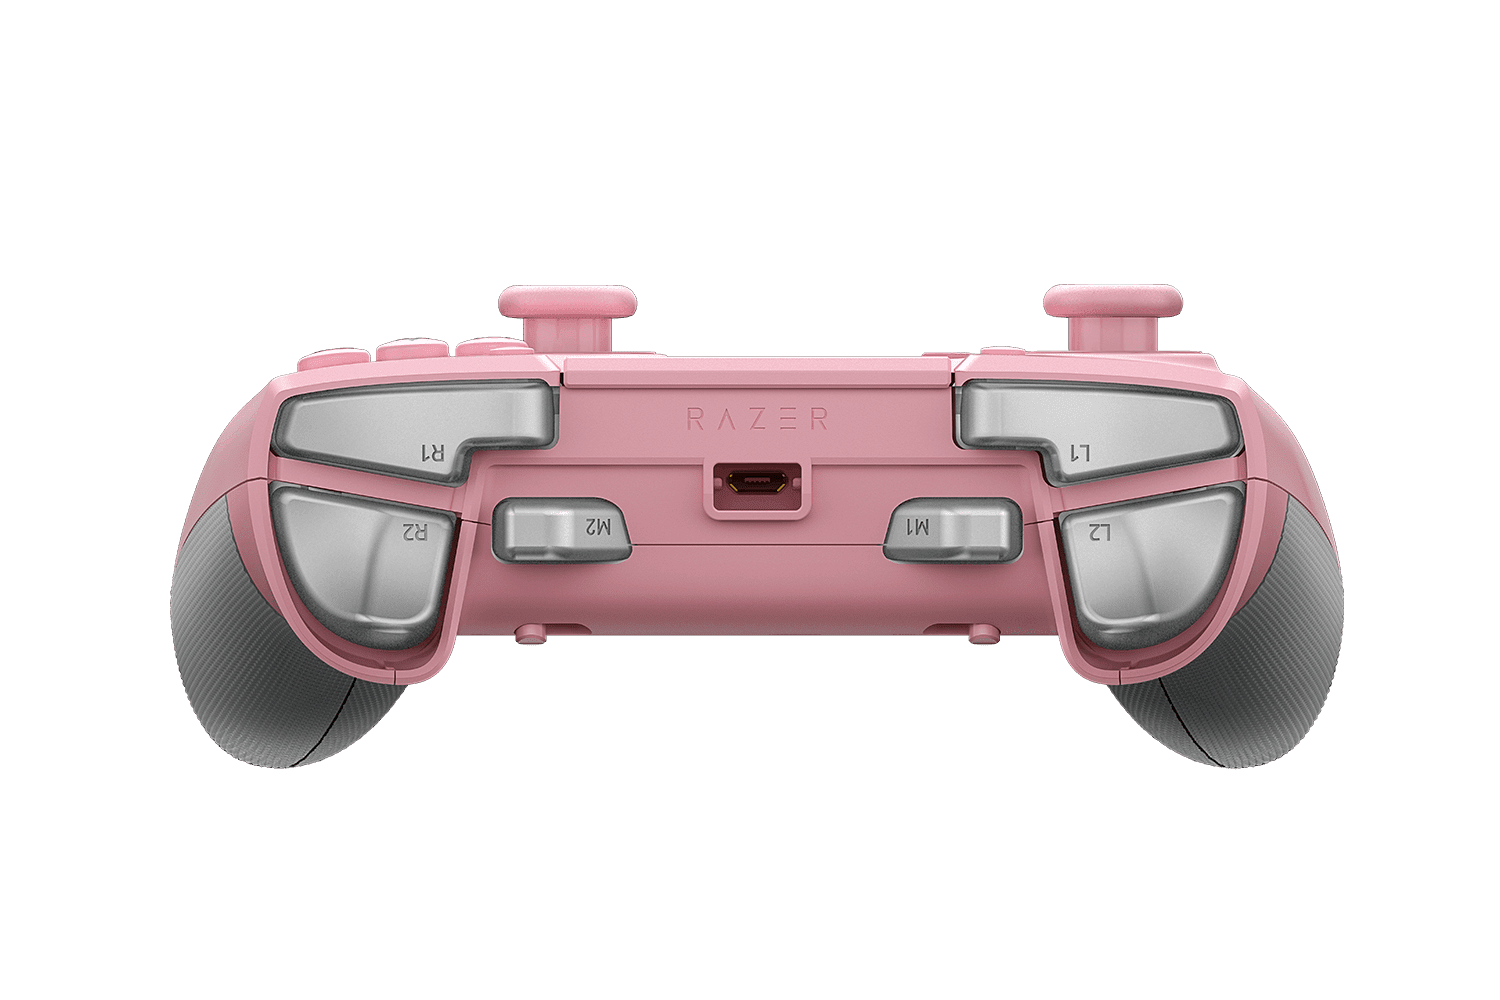 Raiju Tournament Edition PS4 Dedicated Wireless Controller (Quartz Pink)